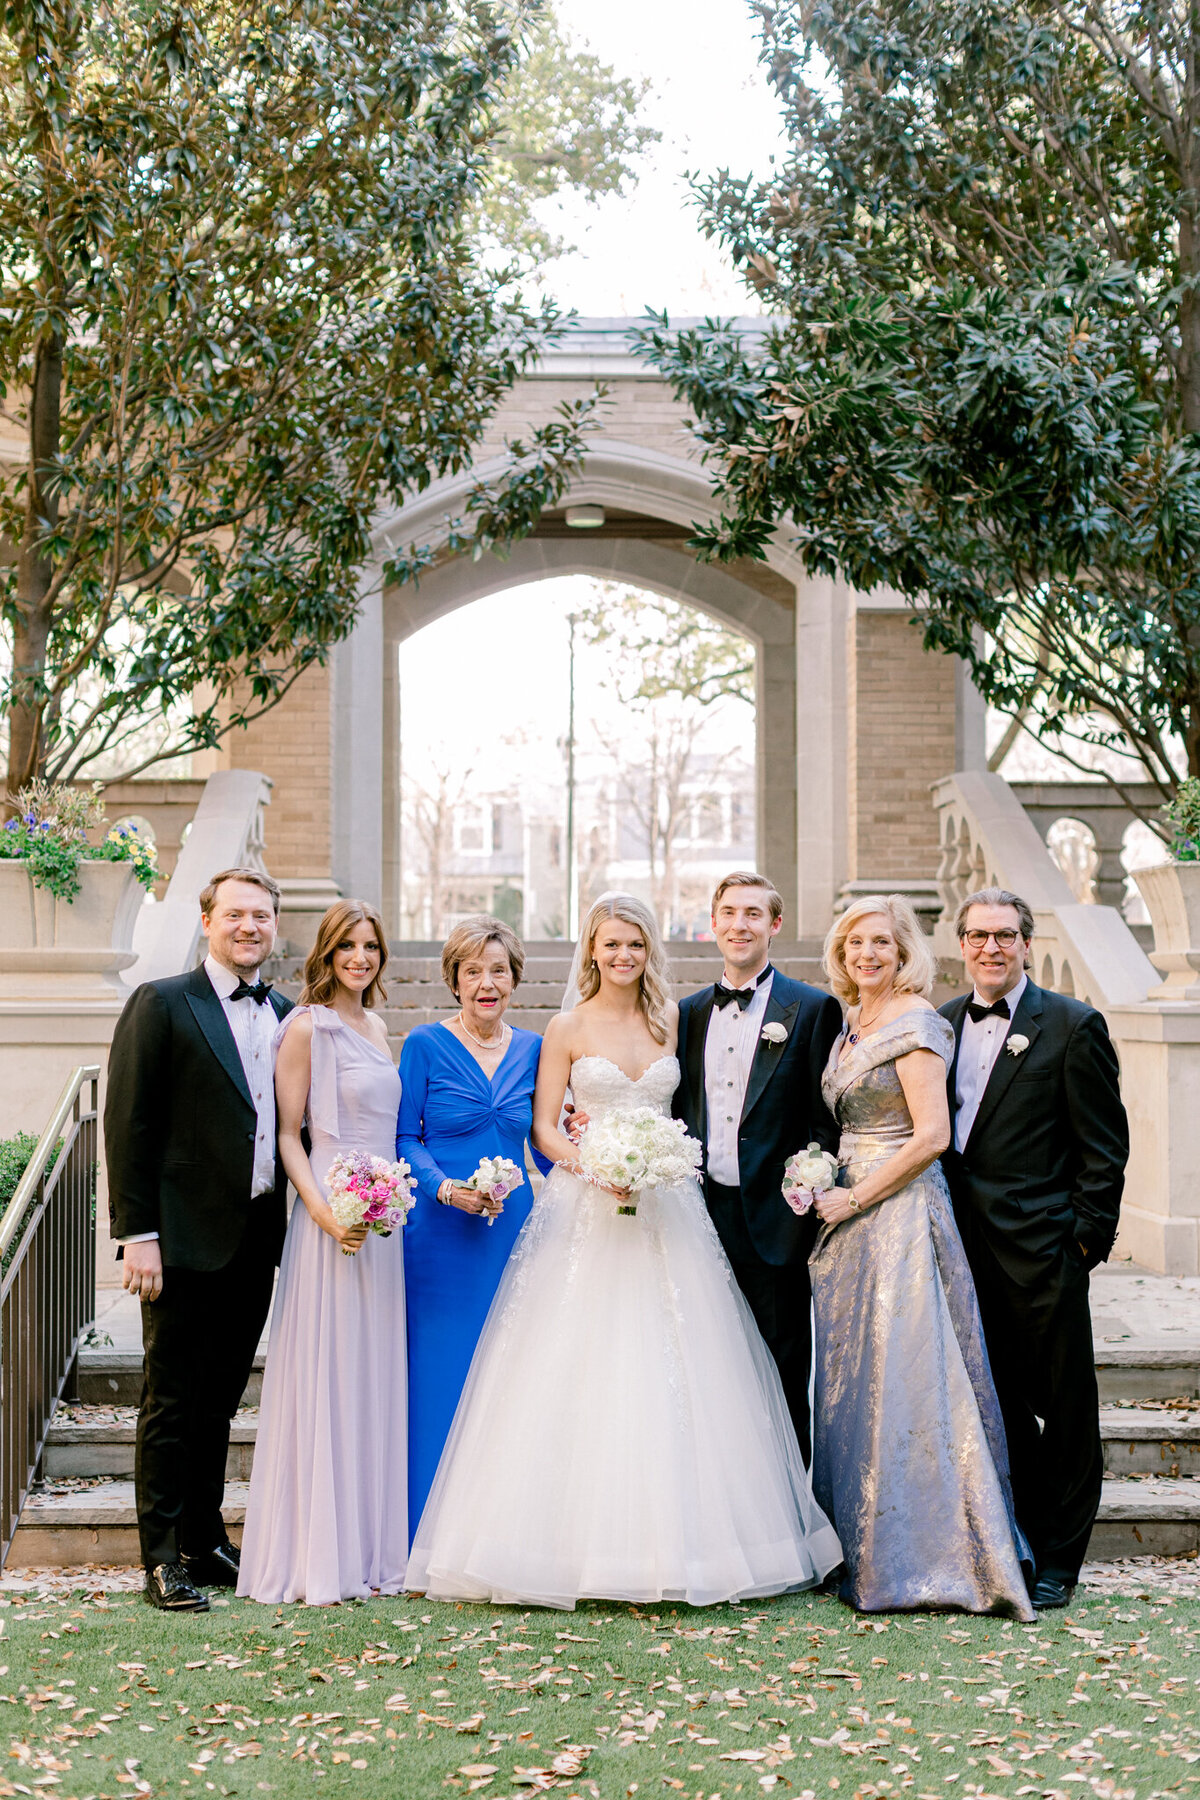 Shelby & Thomas's Wedding at HPUMC The Room on Main | Dallas Wedding Photographer | Sami Kathryn Photography-140